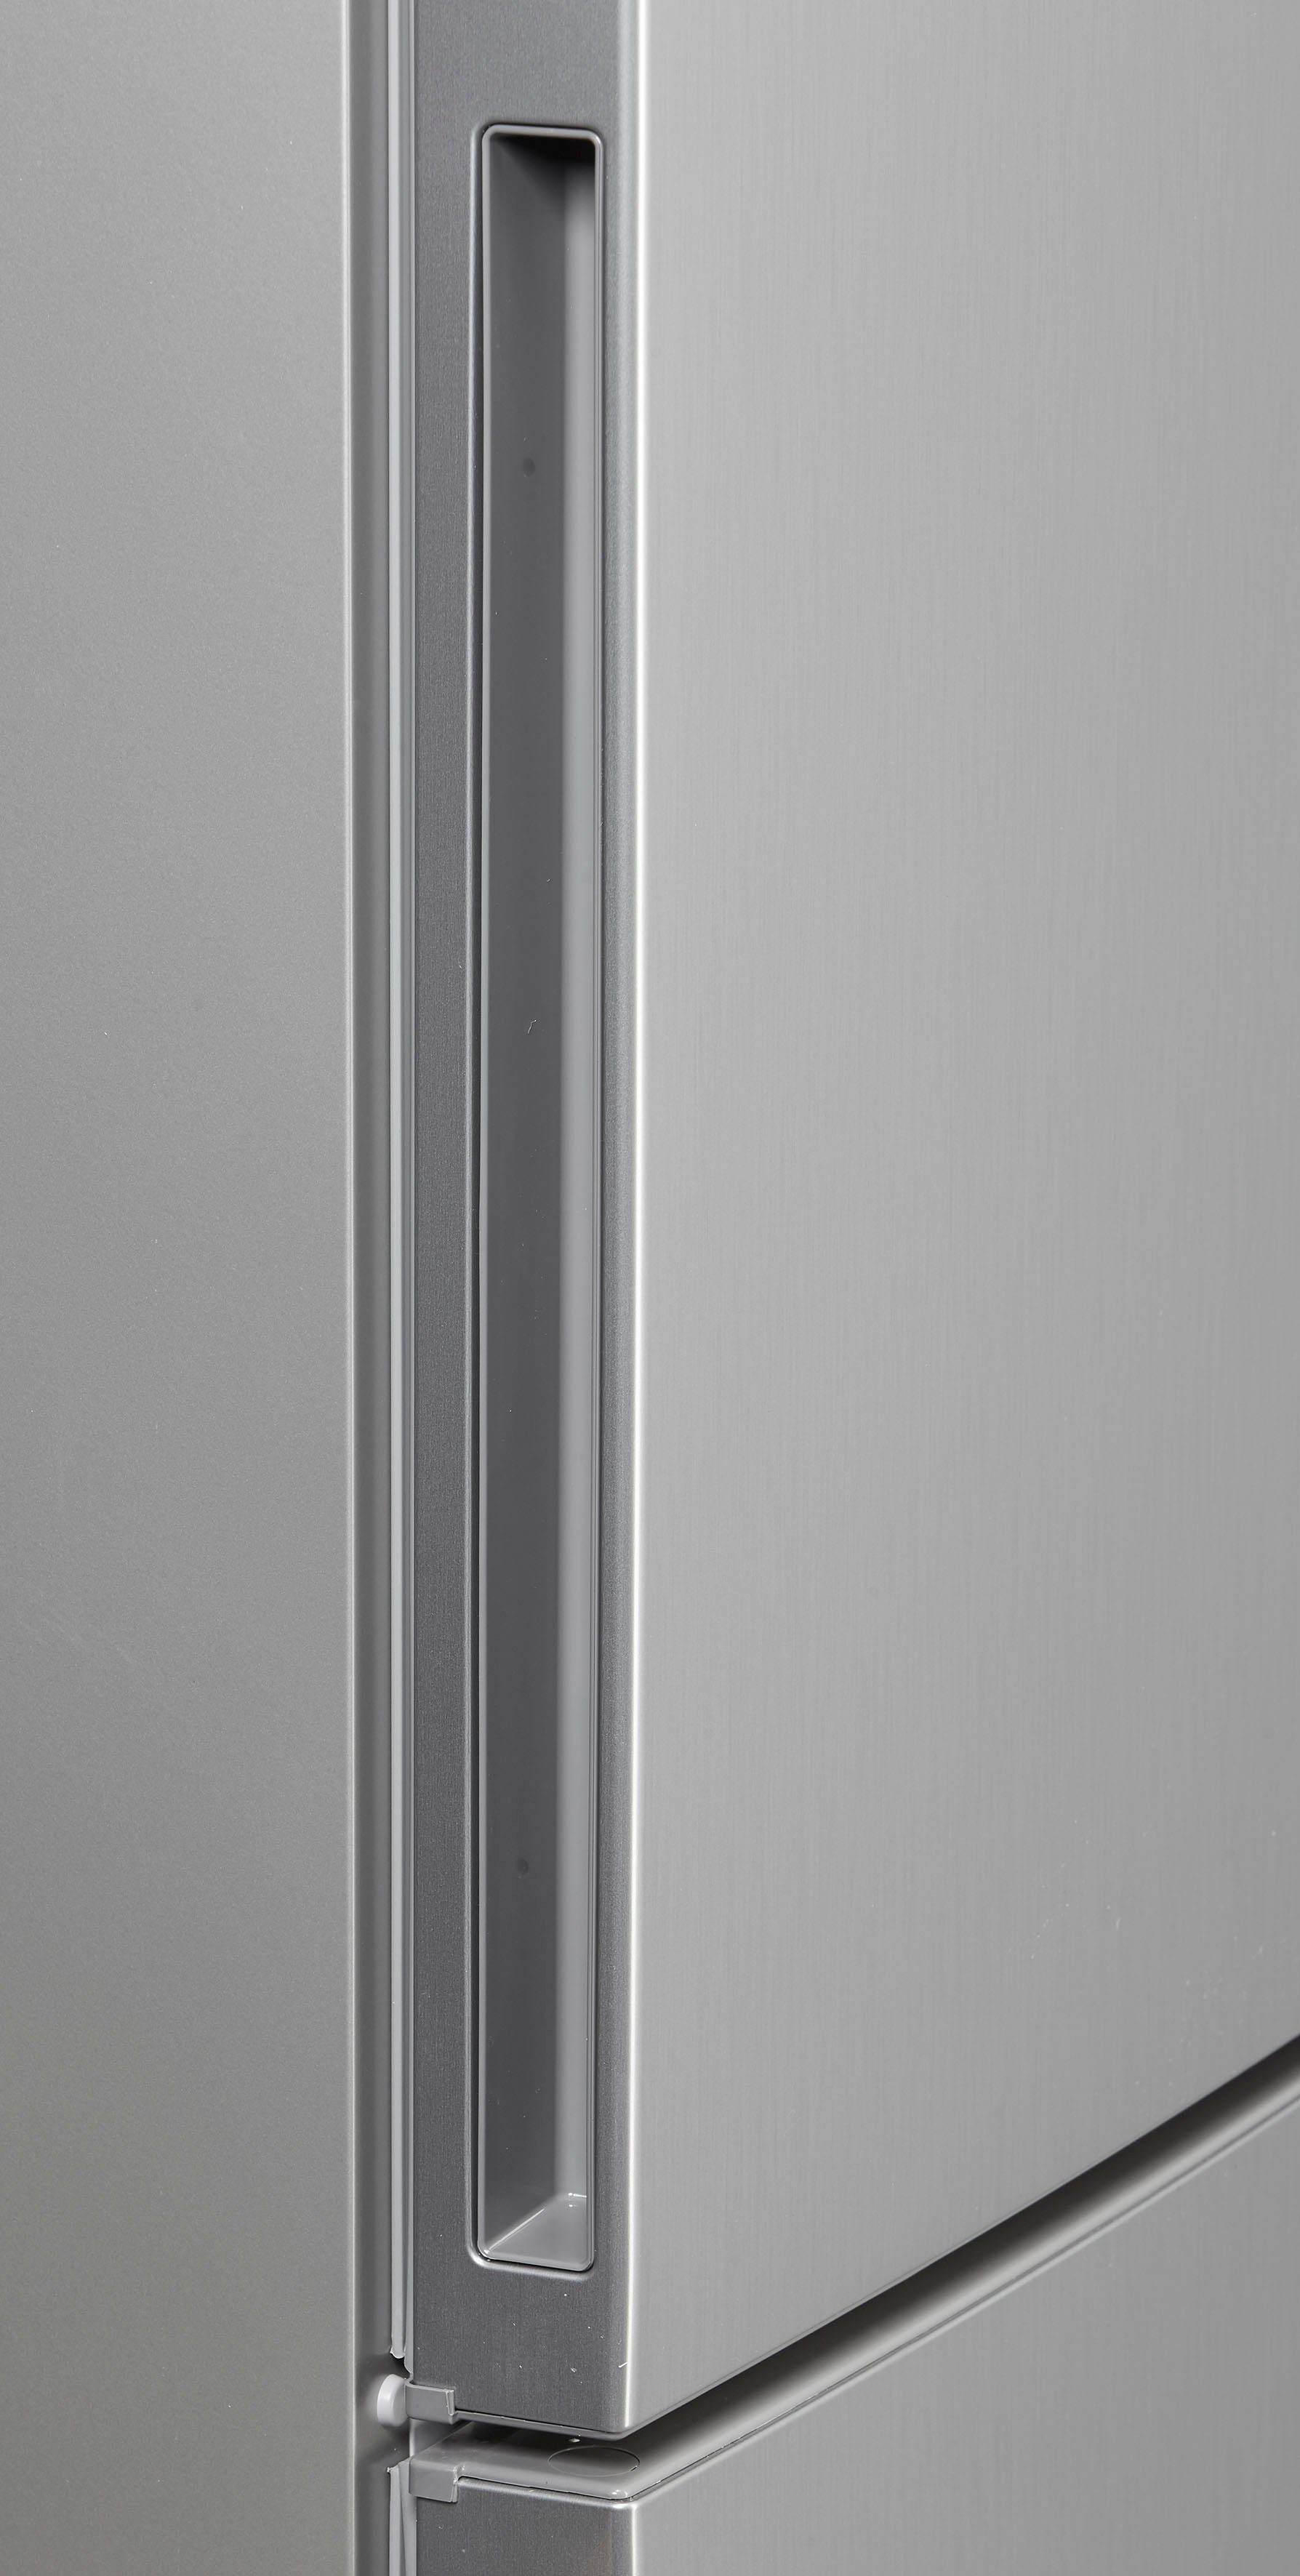 BOSCH Kühl-/Gefrierkombination KGE36ALCA, 186 cm hoch, breit cm 60 optik edelstahl